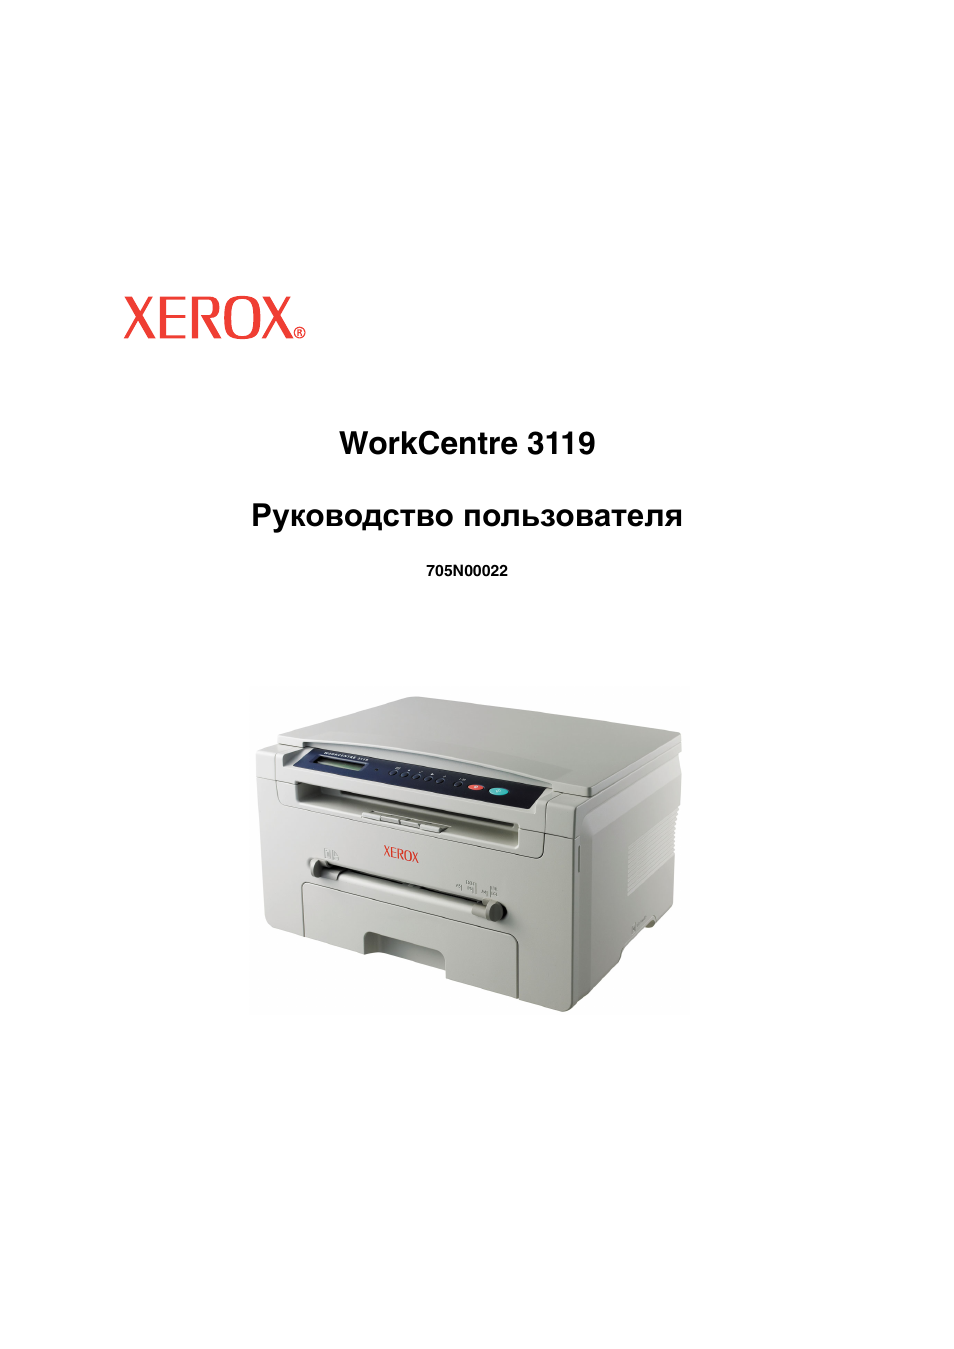 Инструкция для мфу xerox workcenter 3119